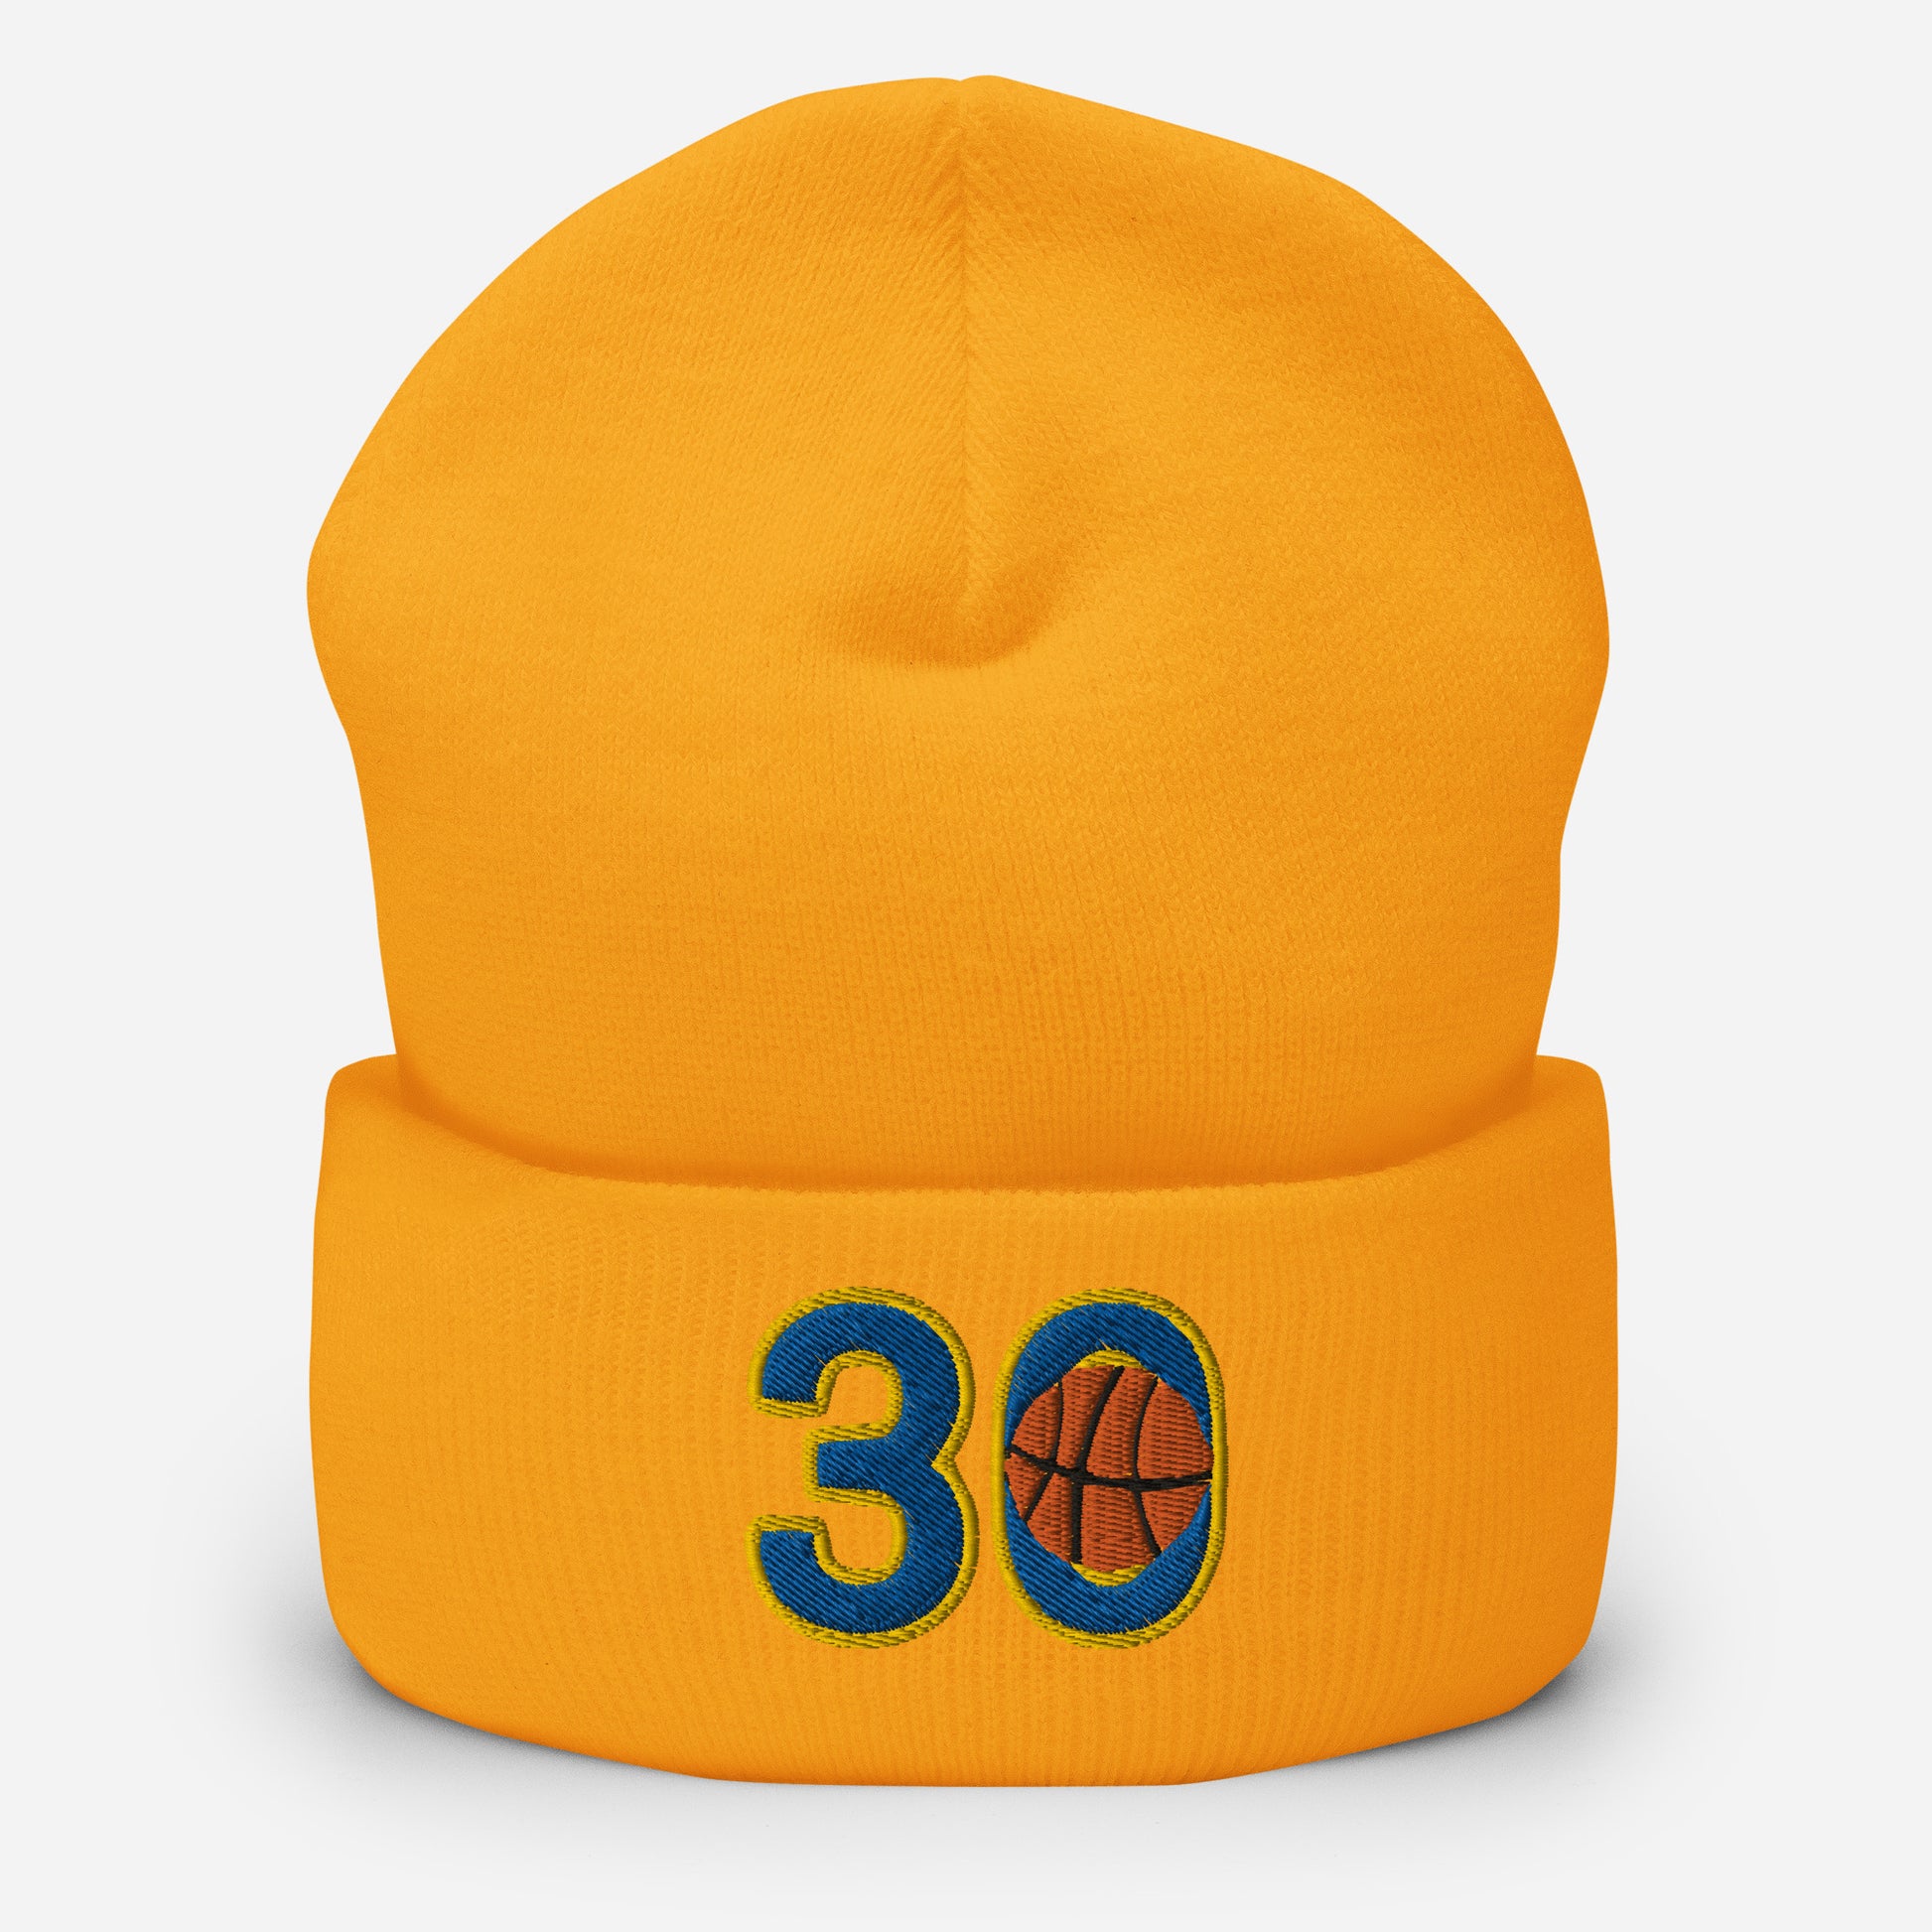 30 Hat / 30 Basketball Hat / 30 Steph Hat / Curry 30 Cuffed Beanie